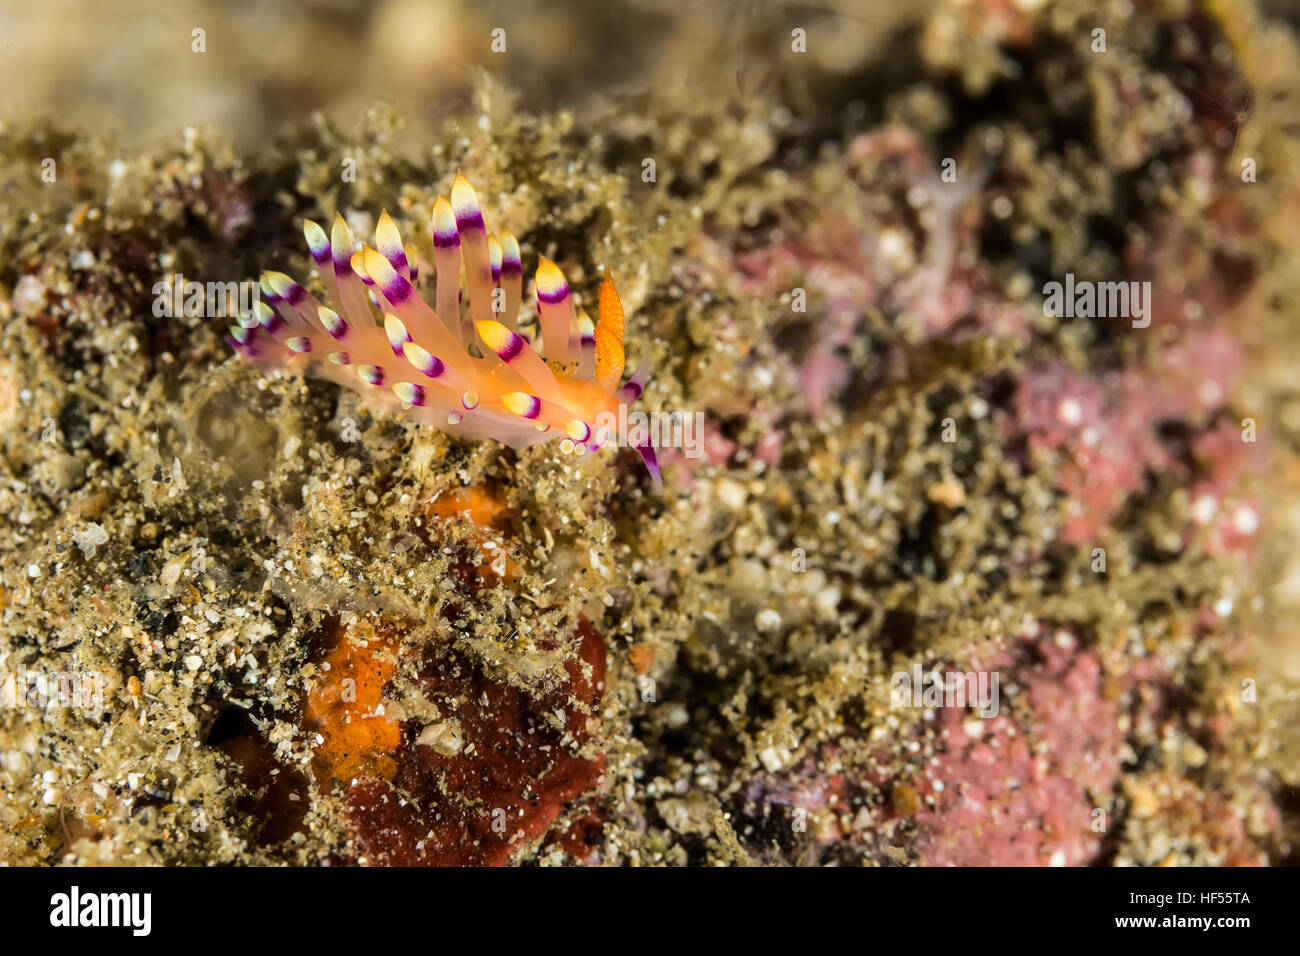 Underwater picture of Cuthona sibogae Nudibranch, Sea Slug Stock Photo